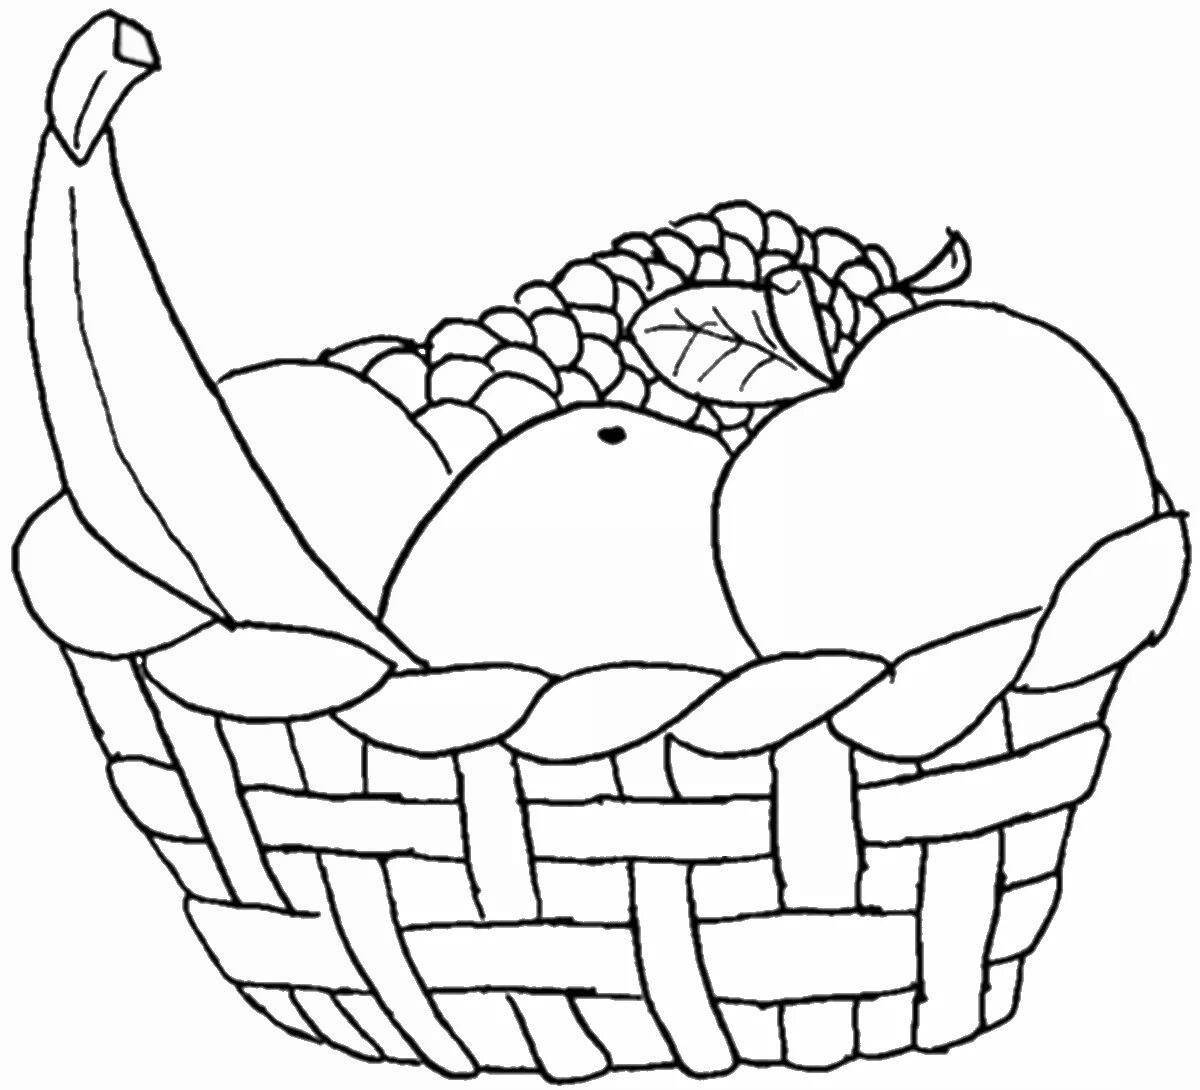 Fun fruit basket coloring book for kids